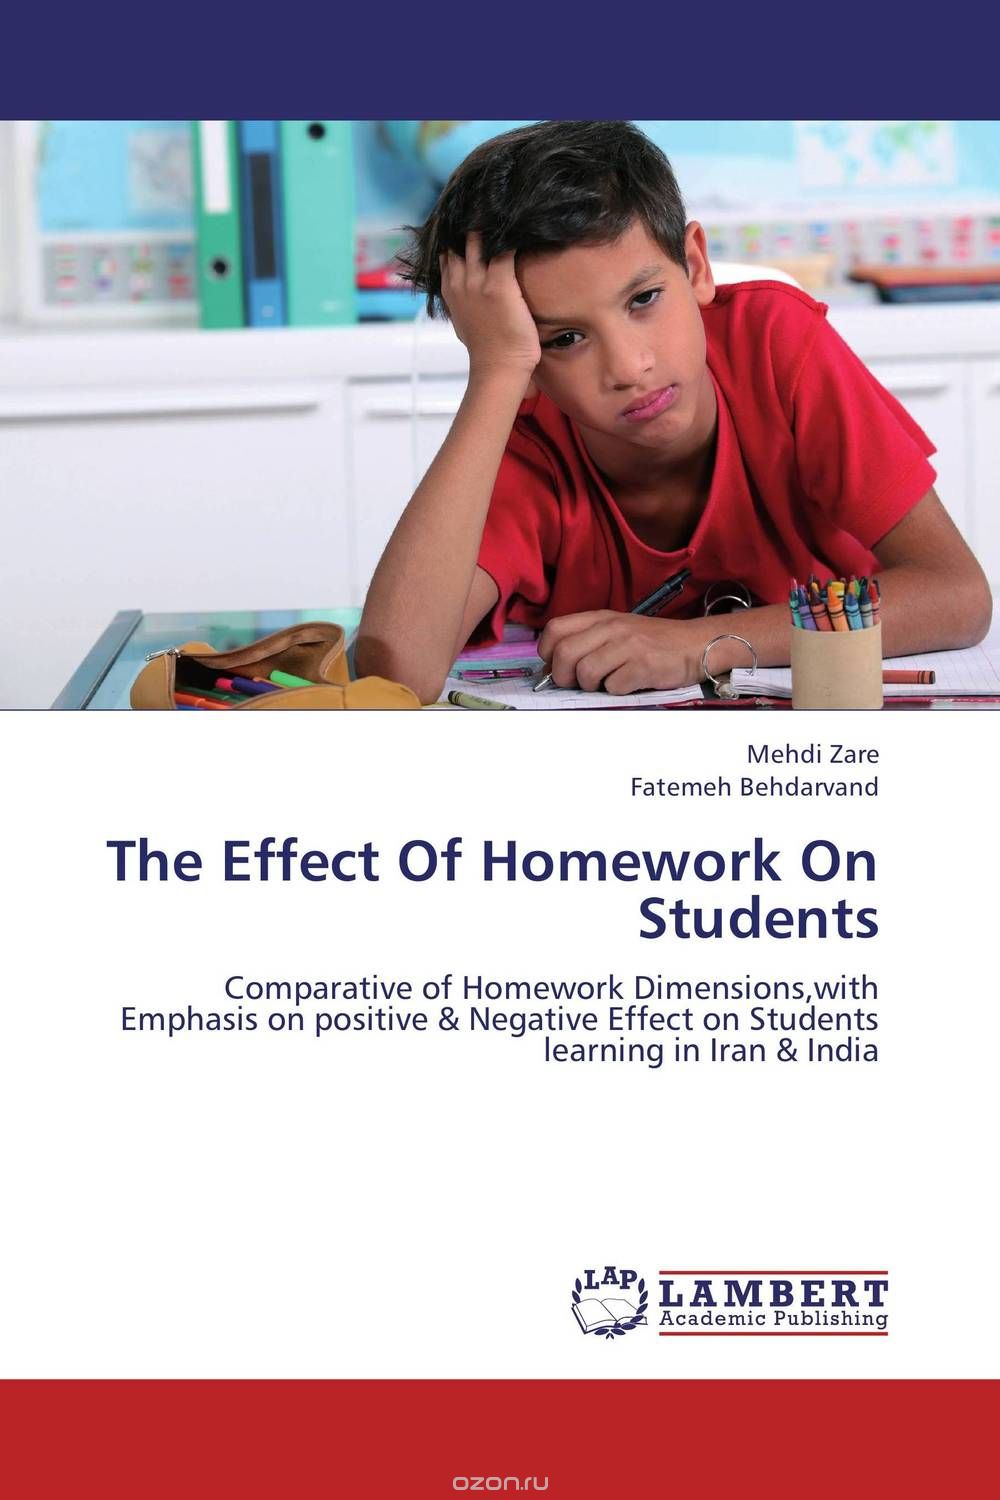 Скачать книгу "The Effect Of Homework On Students"